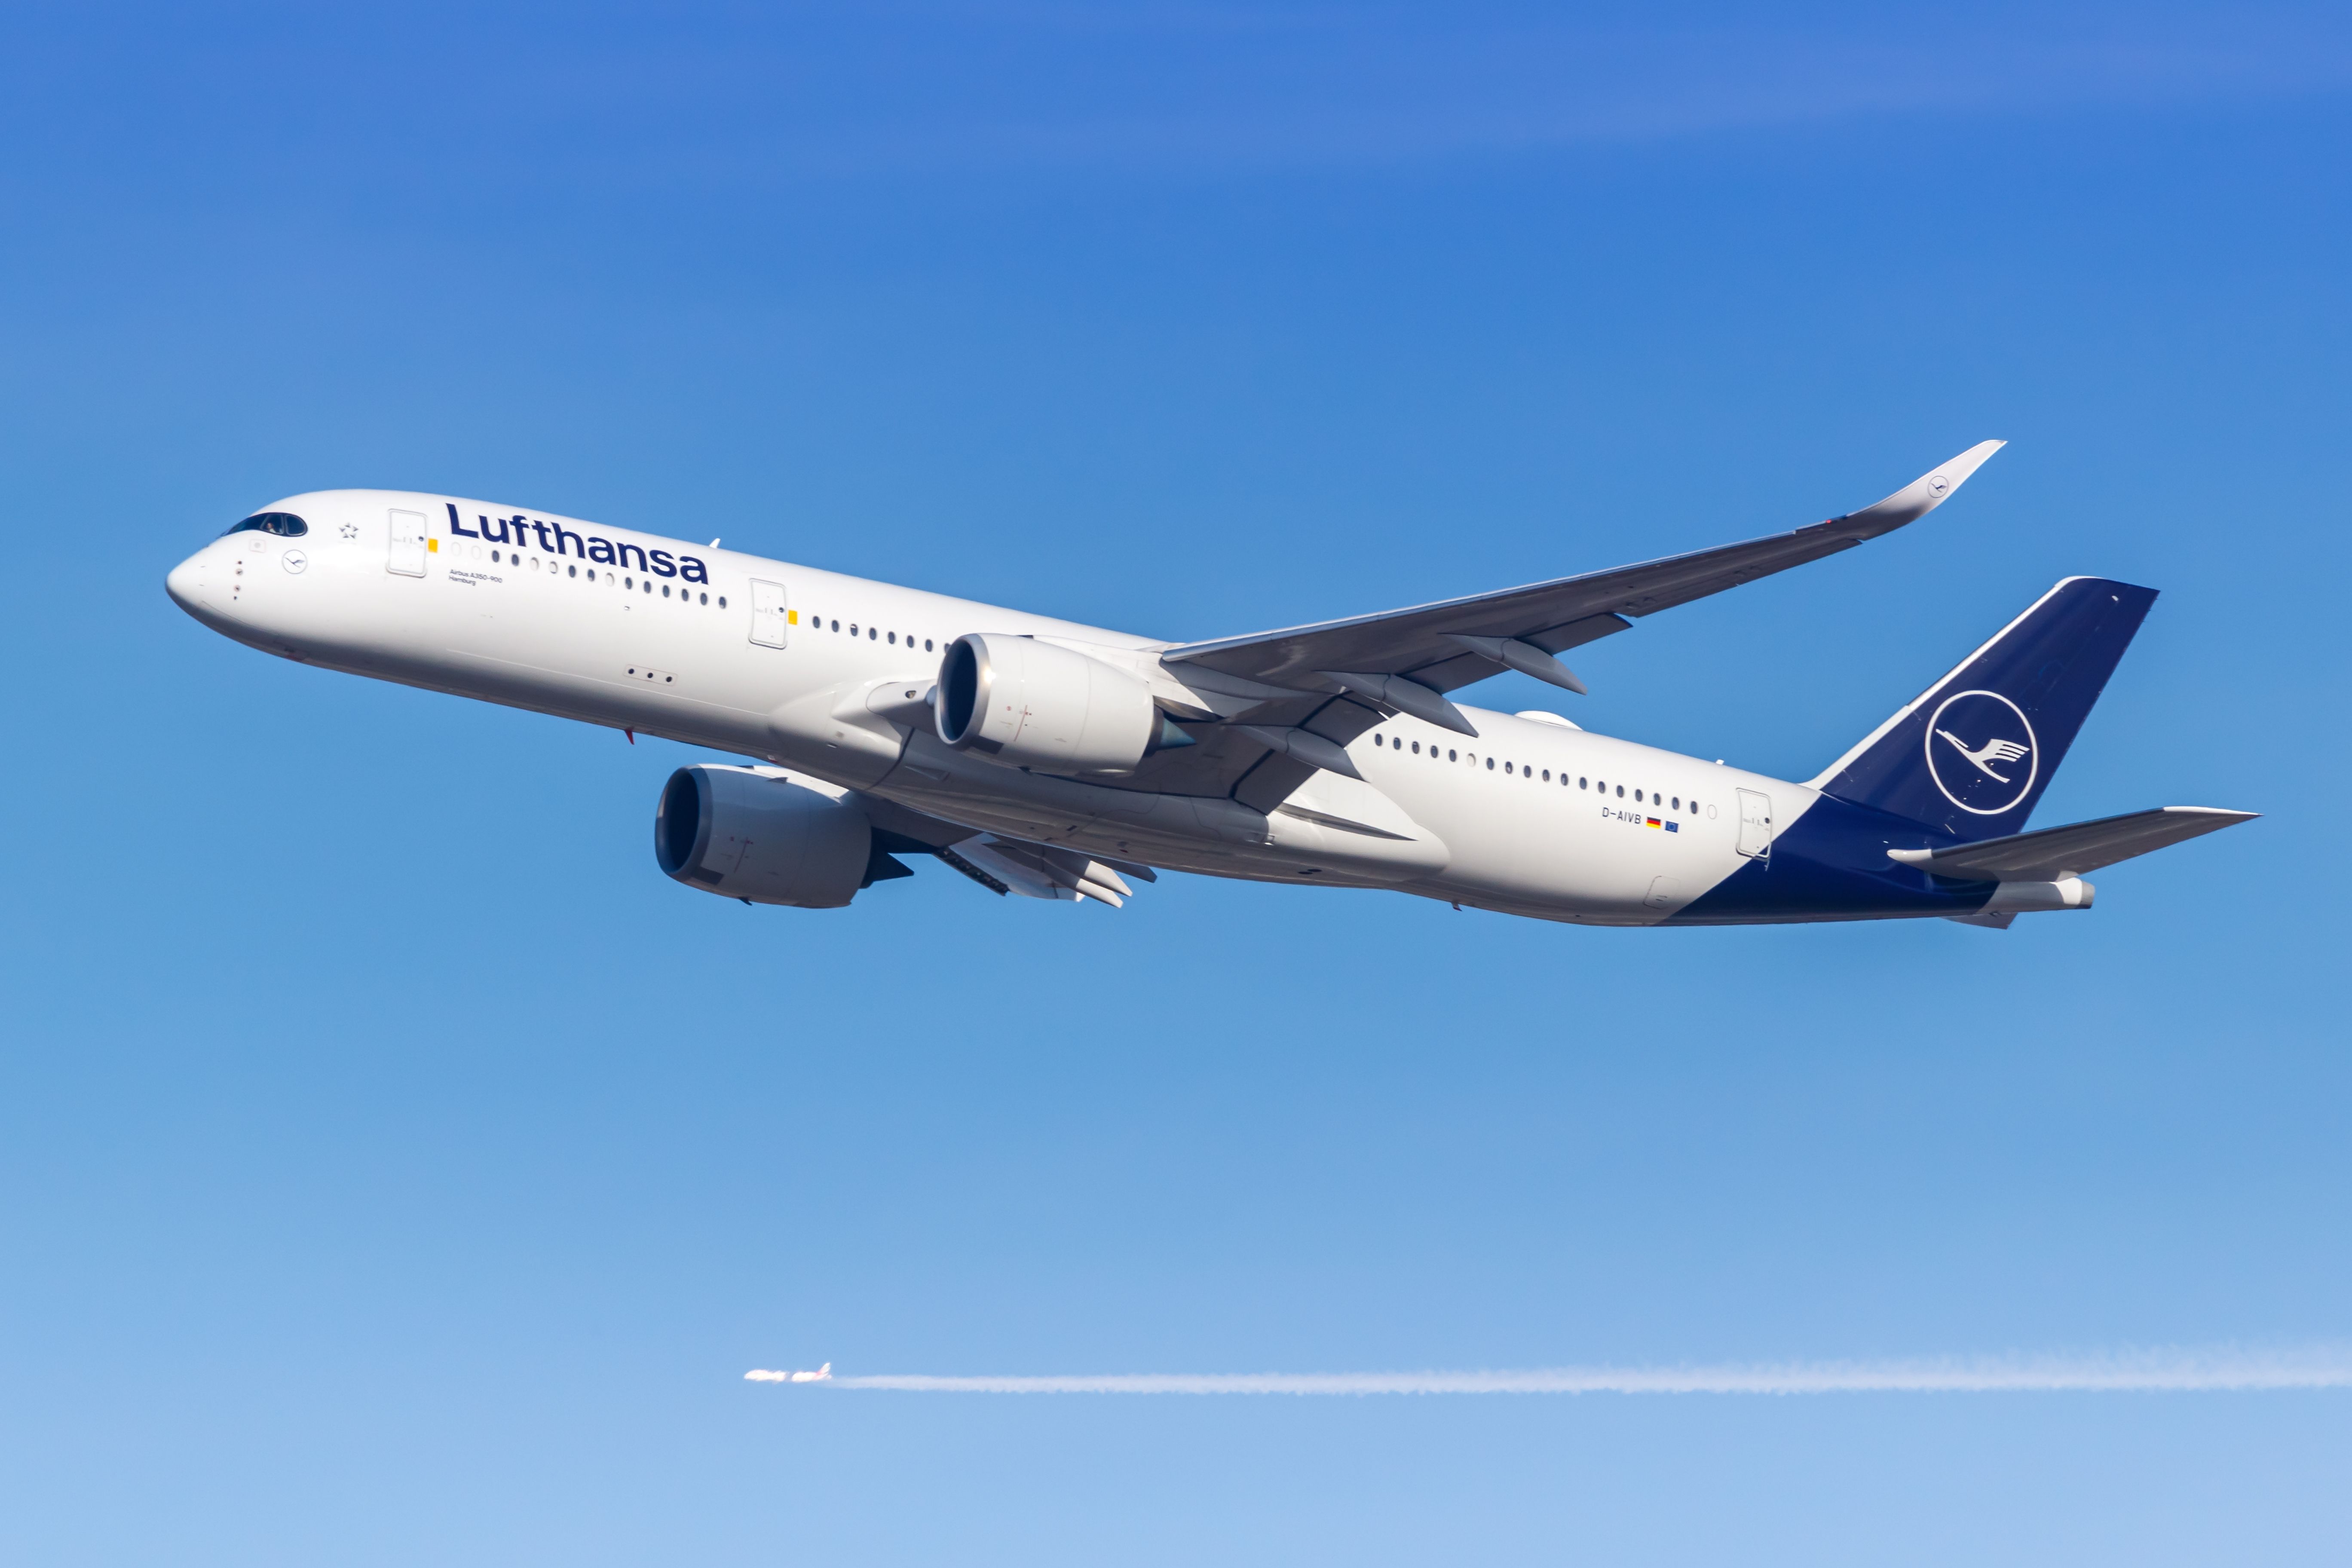 Lufthansa Airbus A350-900 departing Munich Airport MUC shutterstock_2430256167